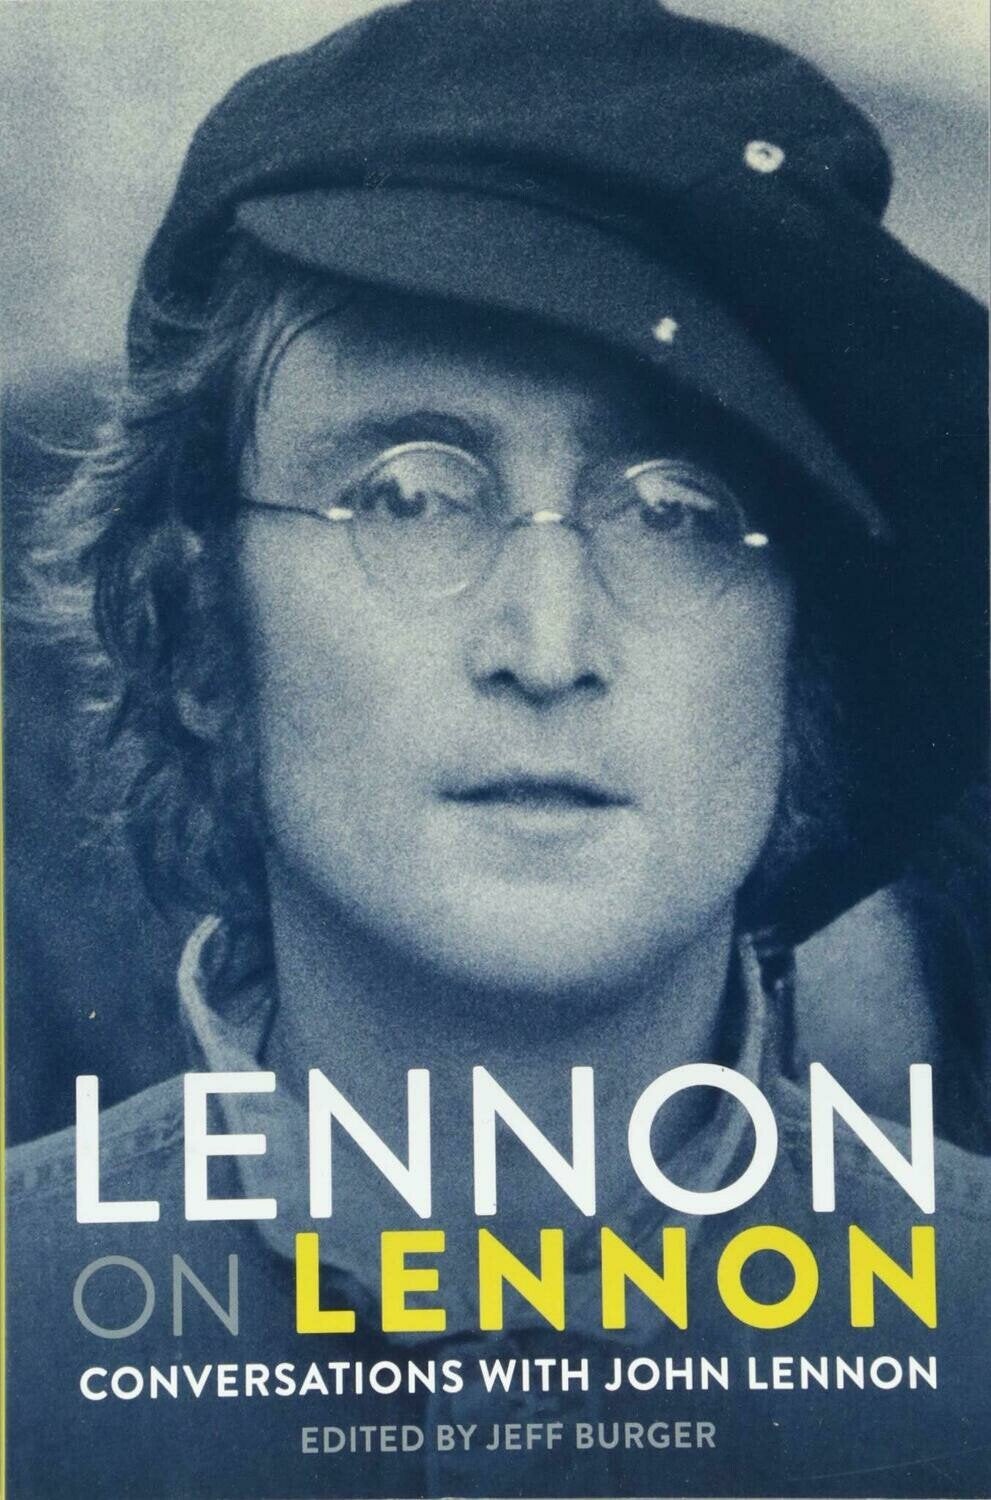 Lennon on Lennon by Jeff Burger